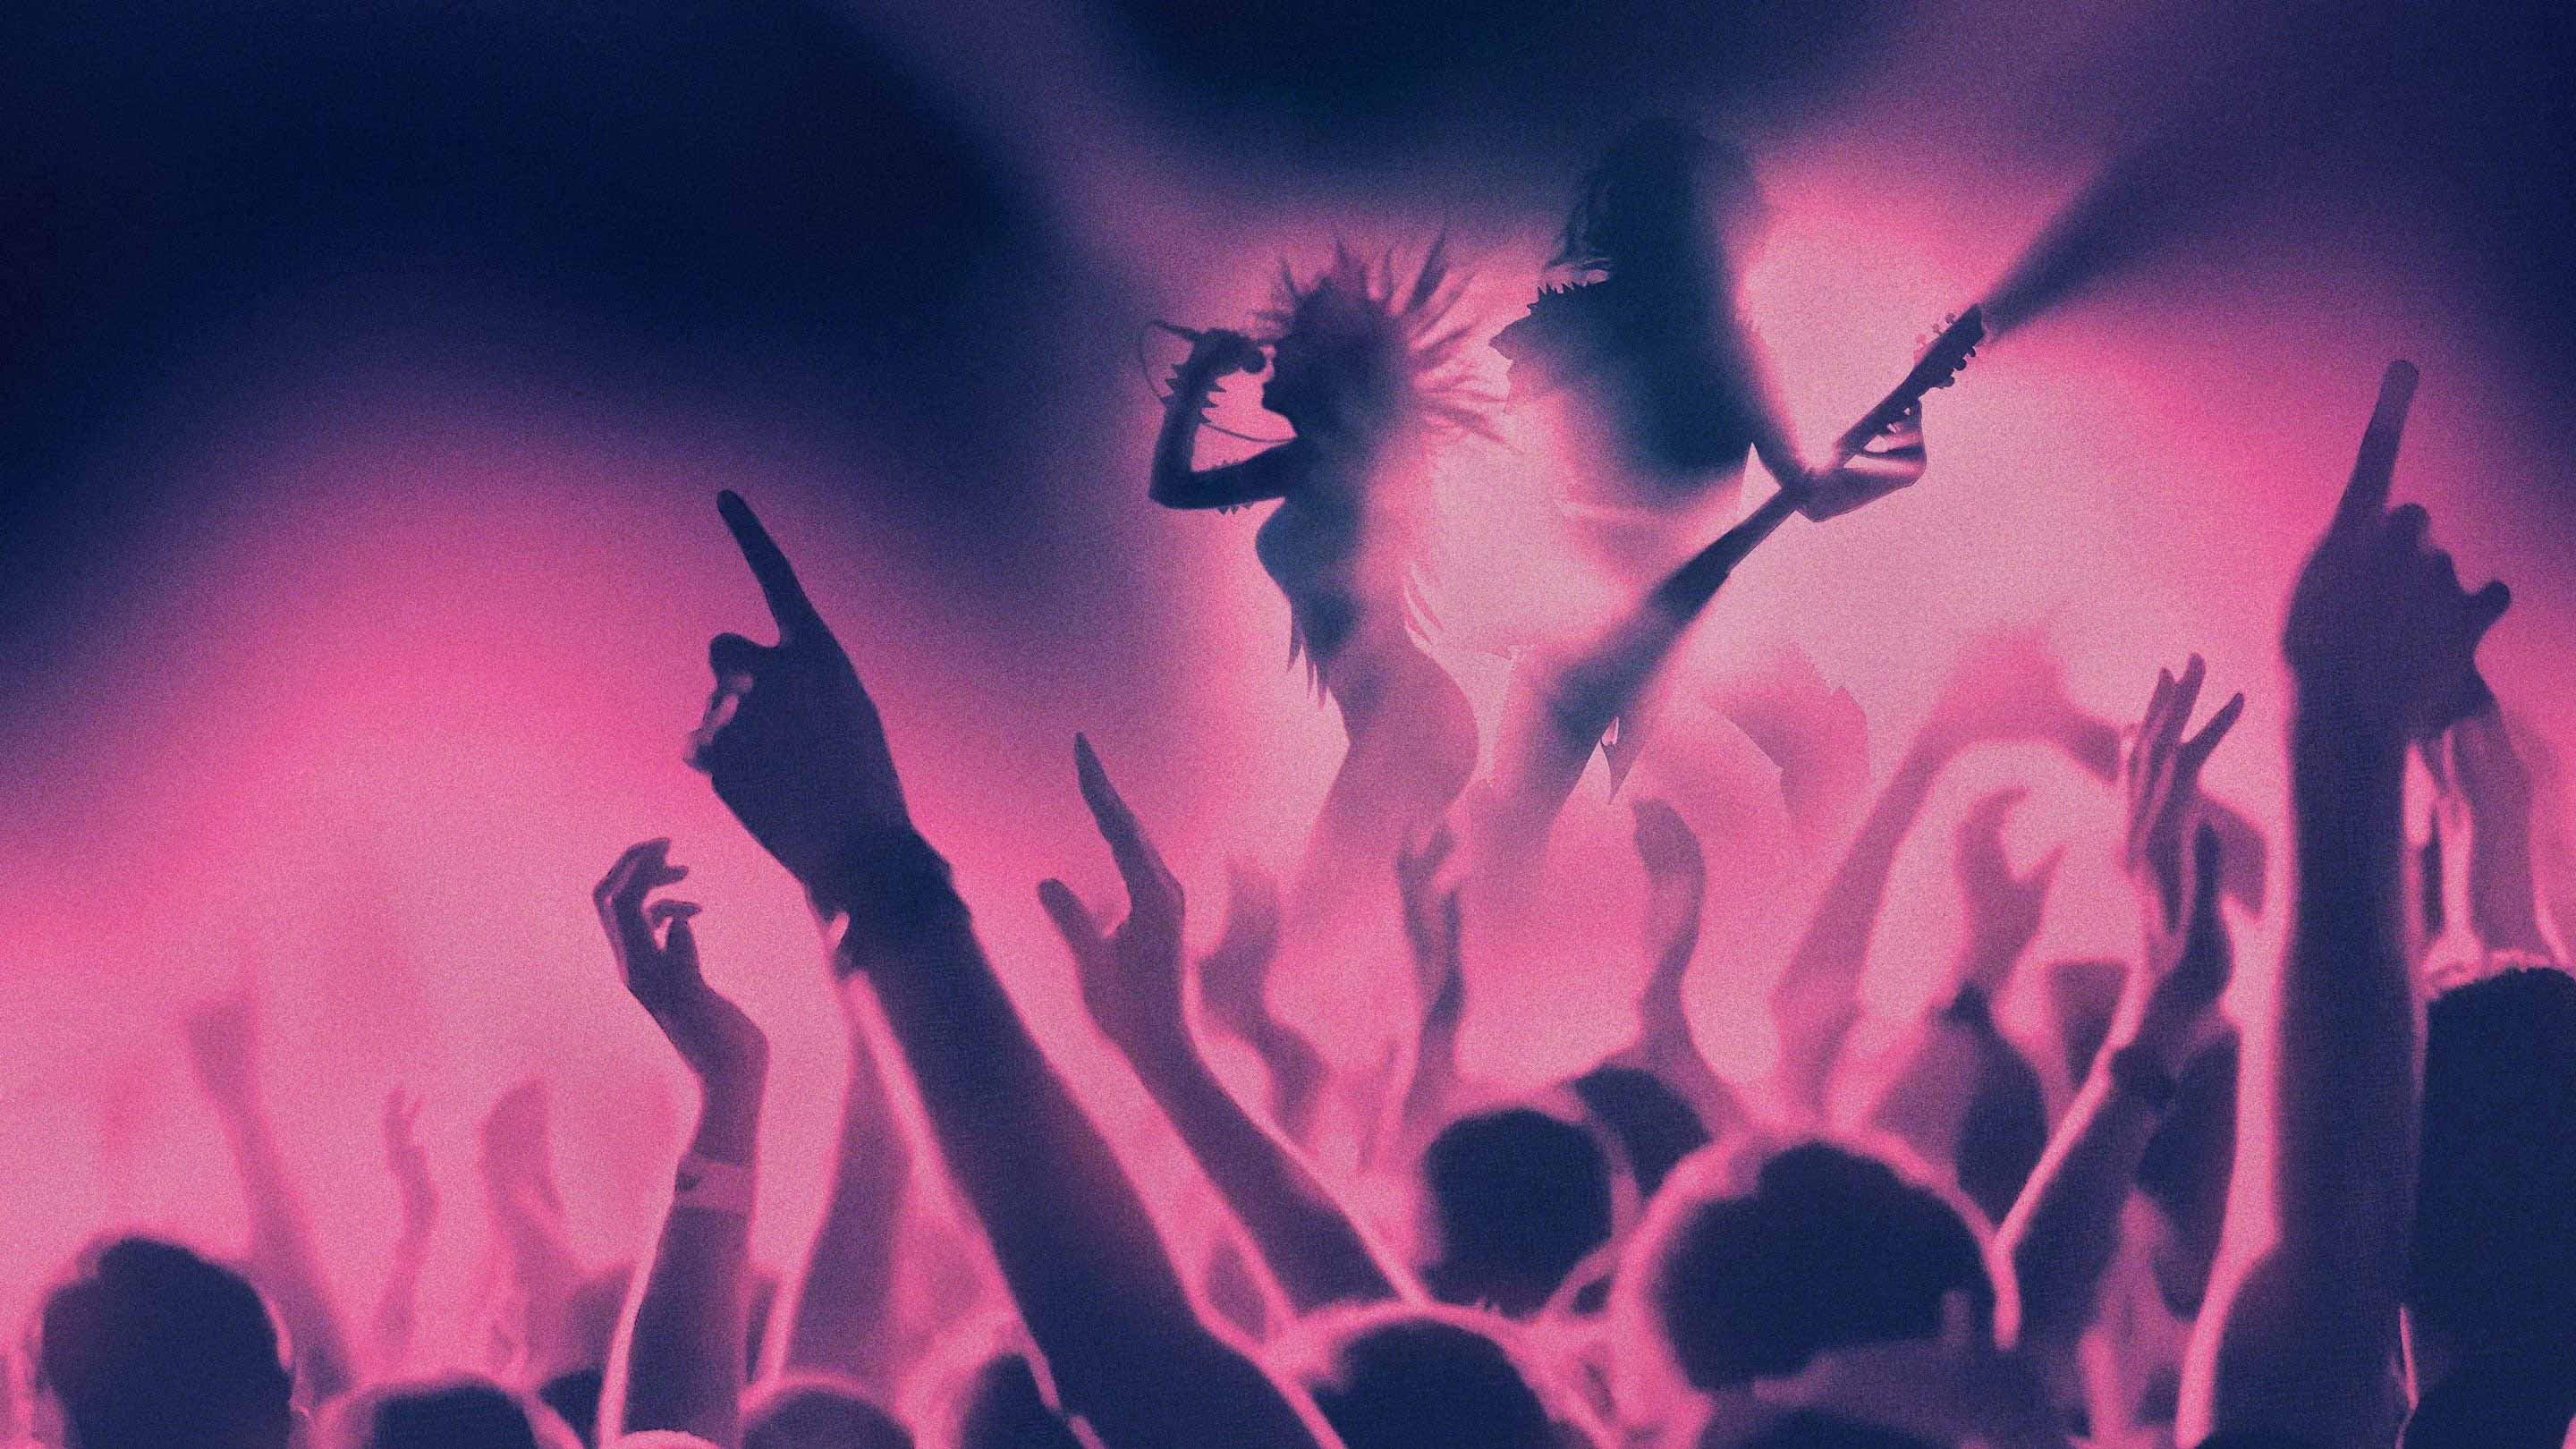 I Wanna Rock - The '80s Metal Dream backdrop